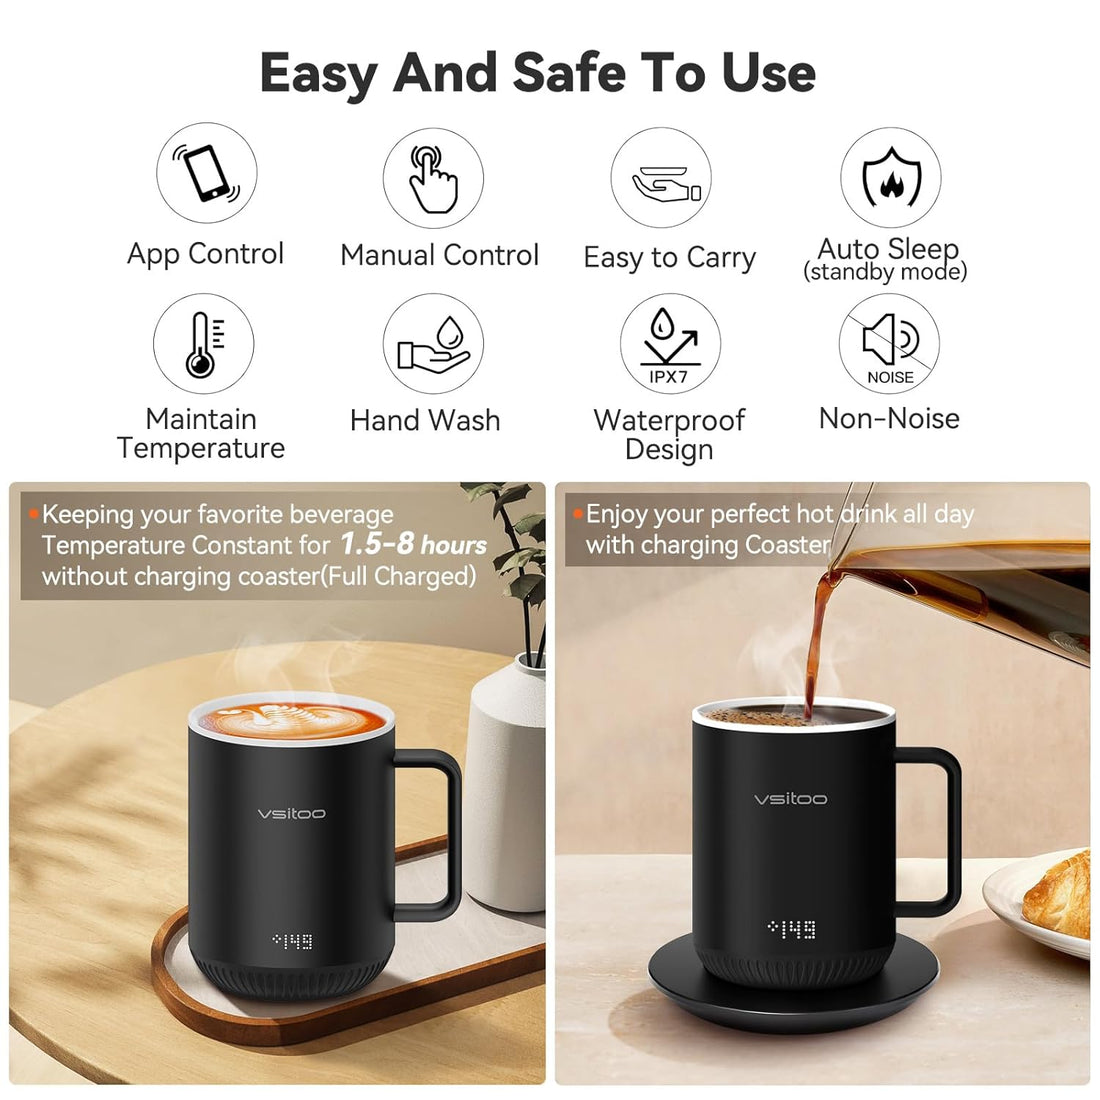 vsitoo Temperature Control Smart Mug 2 - Keep Your Coffee Hot All Day, Self Heating Coffee Mug with LED Display, 10 oz, 90 Min Battery Life - App&Manual Controlled Heated Coffee Mug - Coffee Gifts